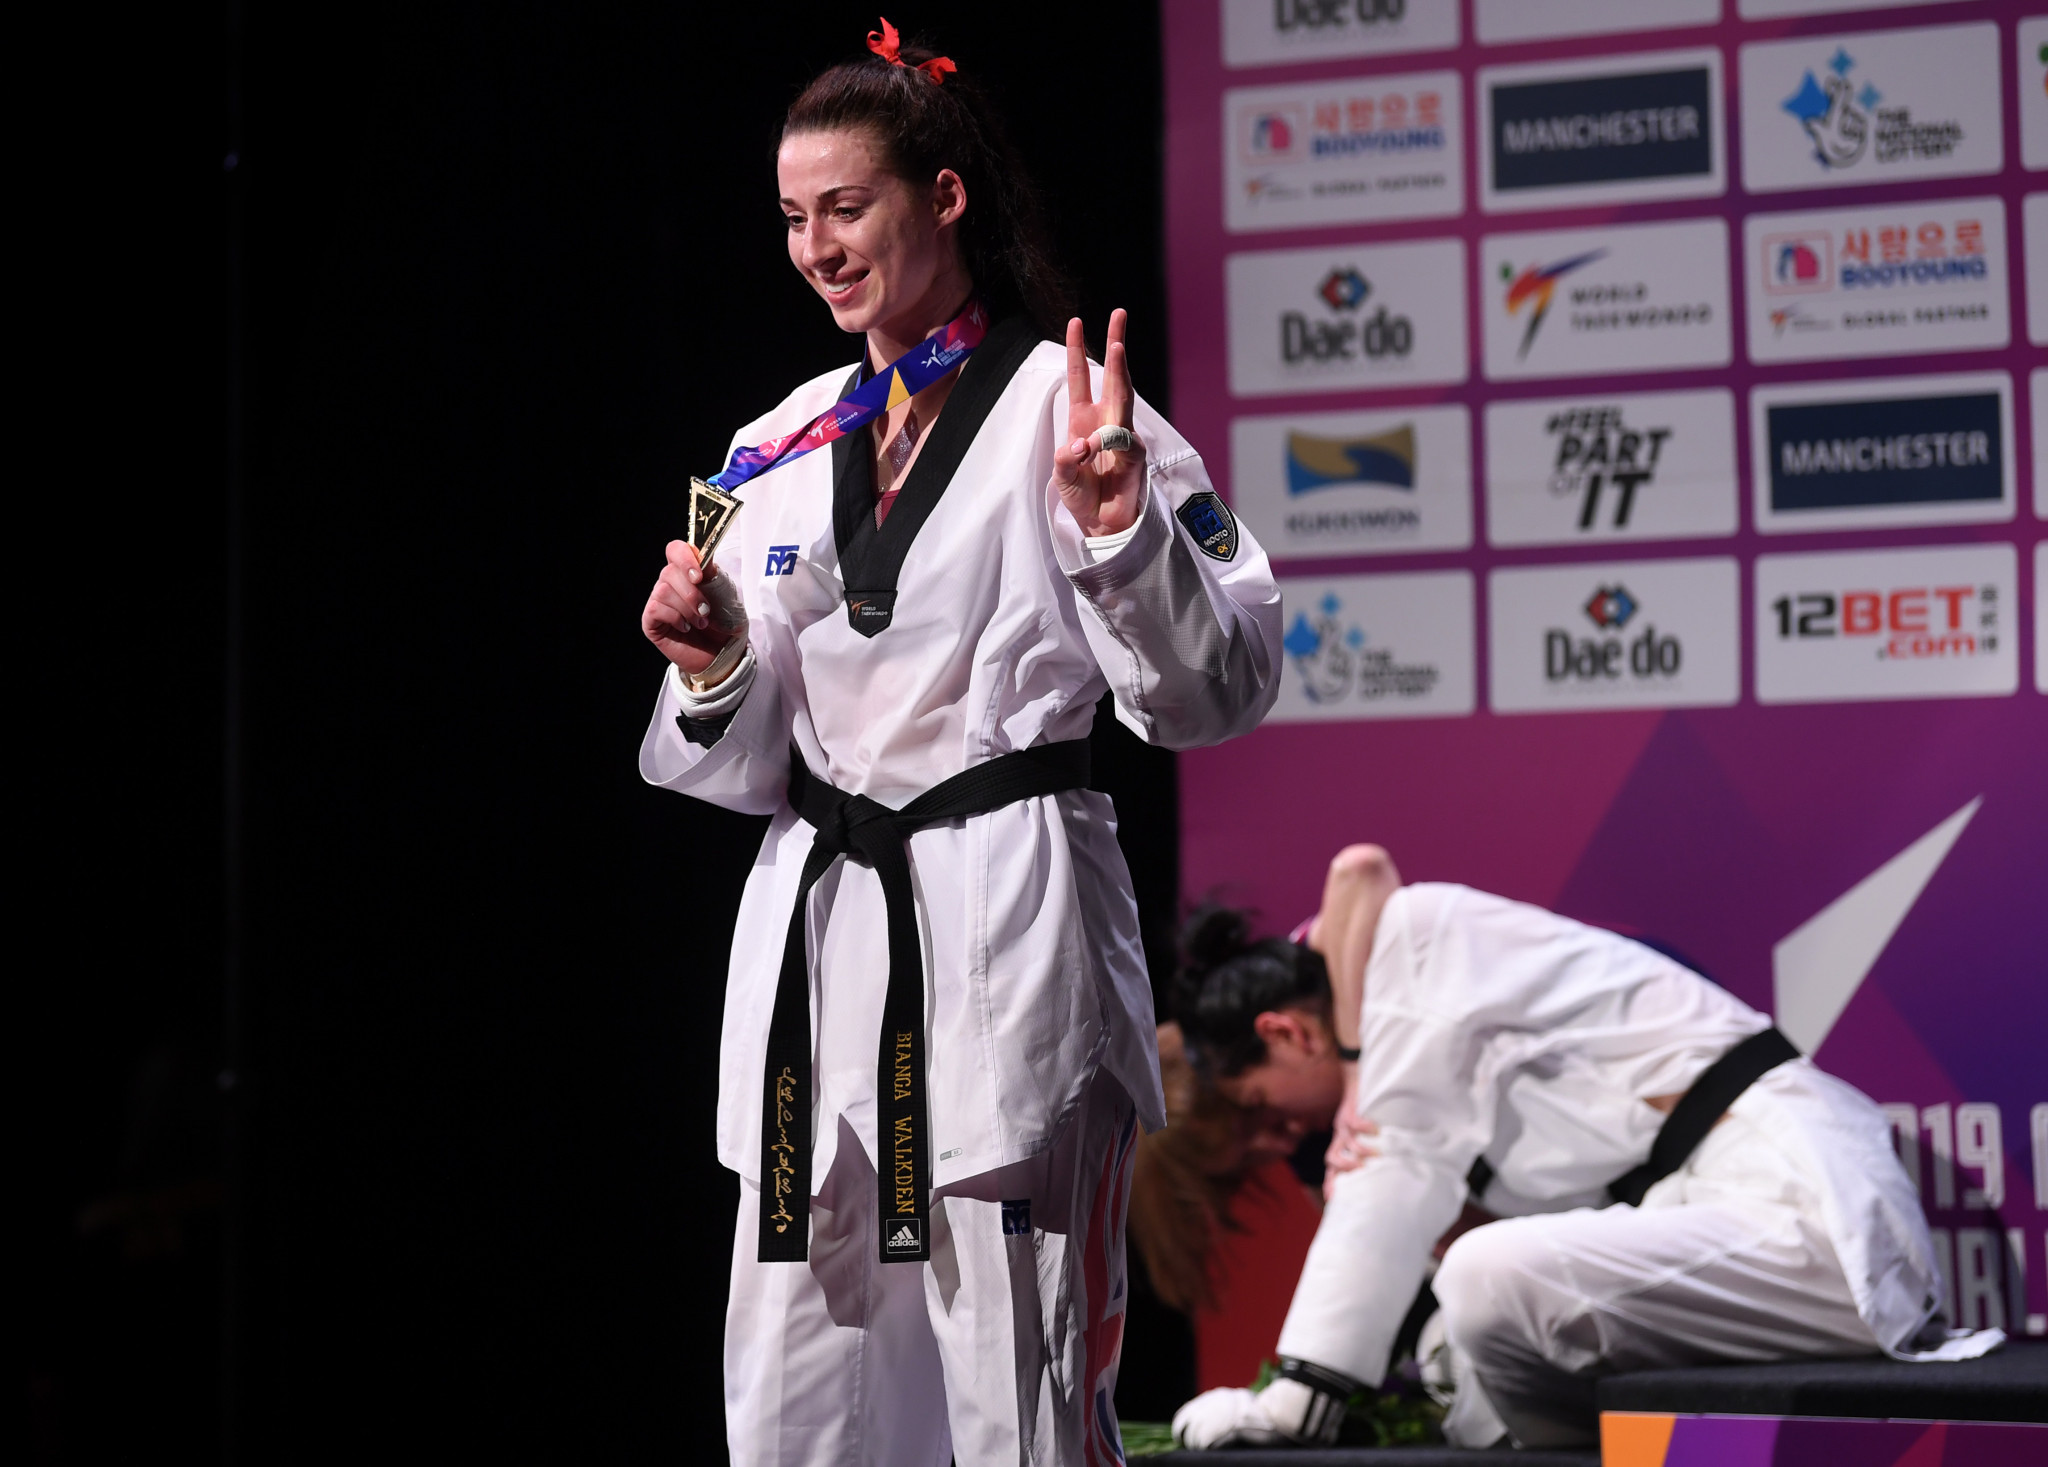 High drama on third day of World Taekwondo Championships 